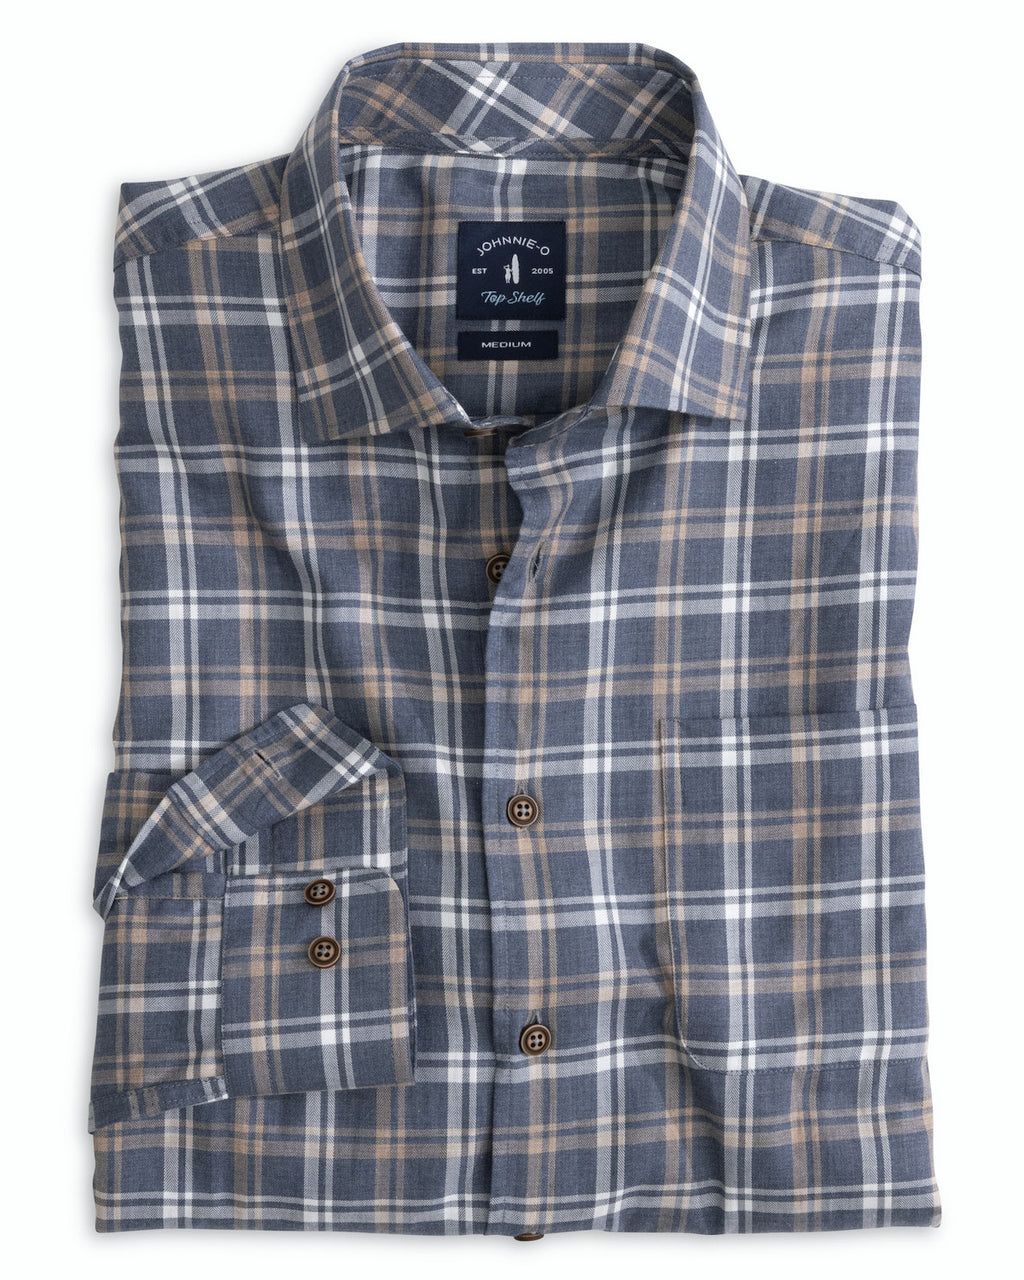 Johnnie O Carl Albany Top Shelf Button Up Shirt JMWL8300